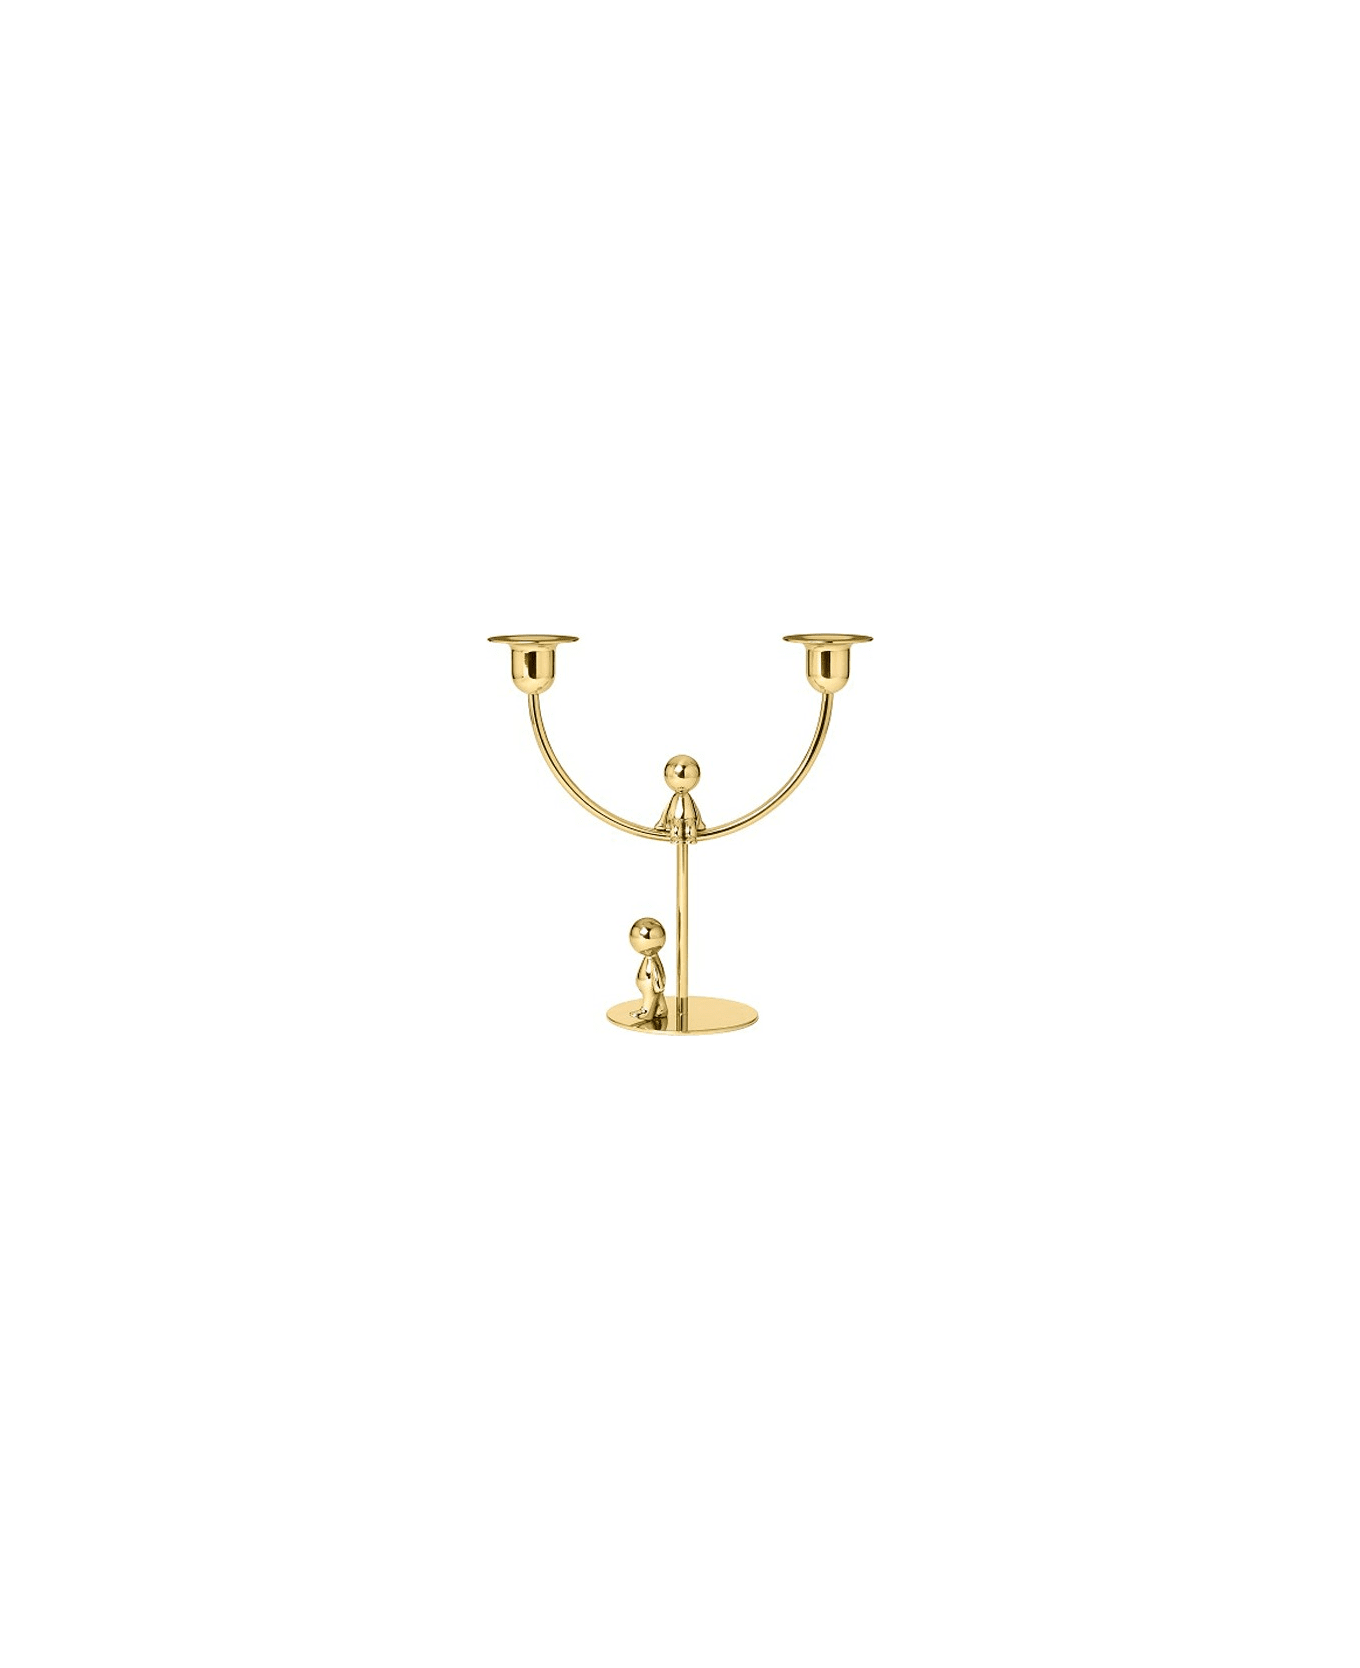 Ghidini 1961 Omini - The Thinker Walkman Candlestick Polished Brass - Polished brass インテリア雑貨